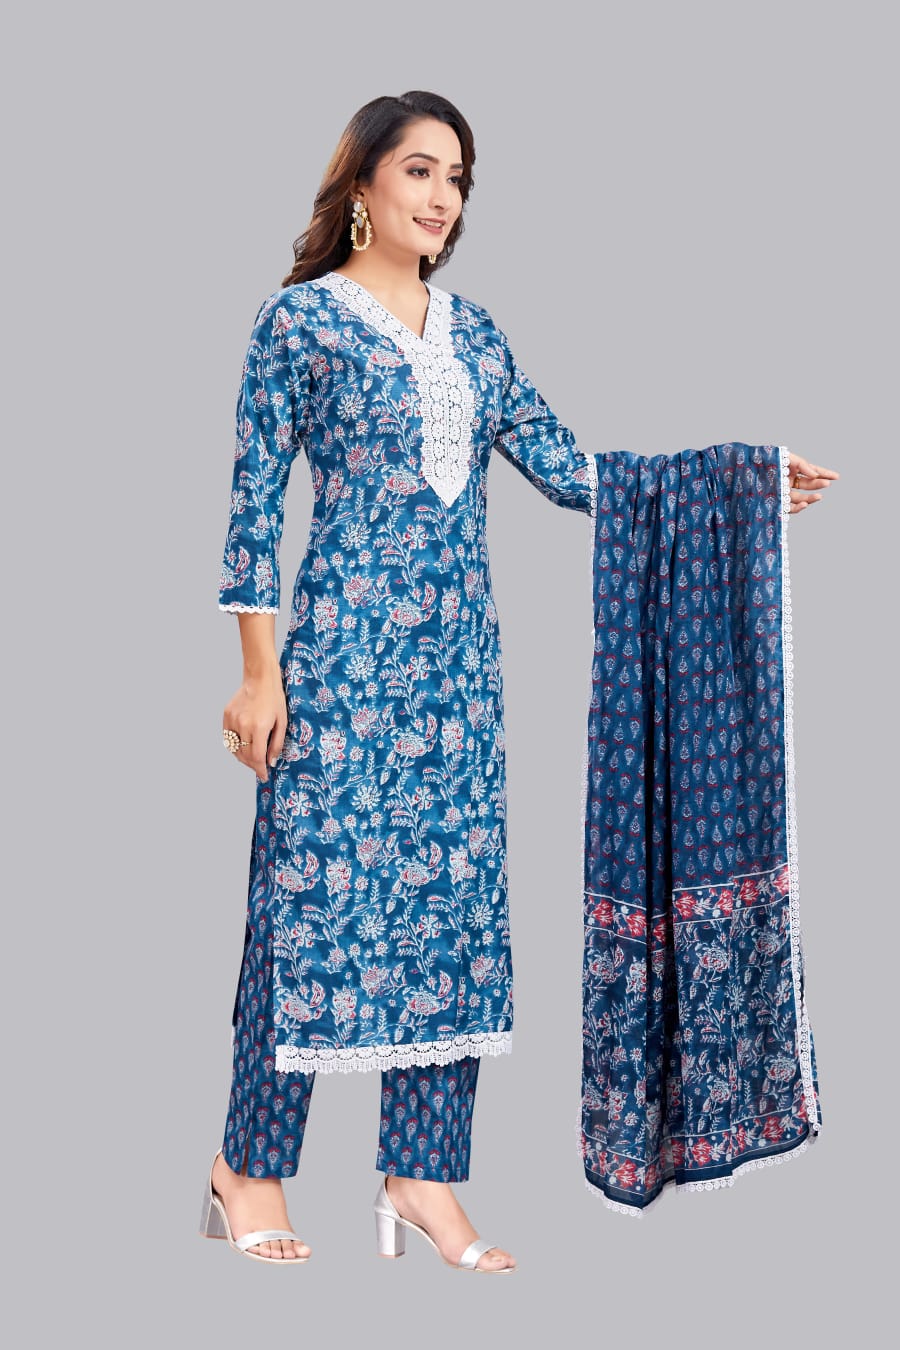 Cottshine Pure Cotton Blue Floral Printed Kurta suit with dupatta